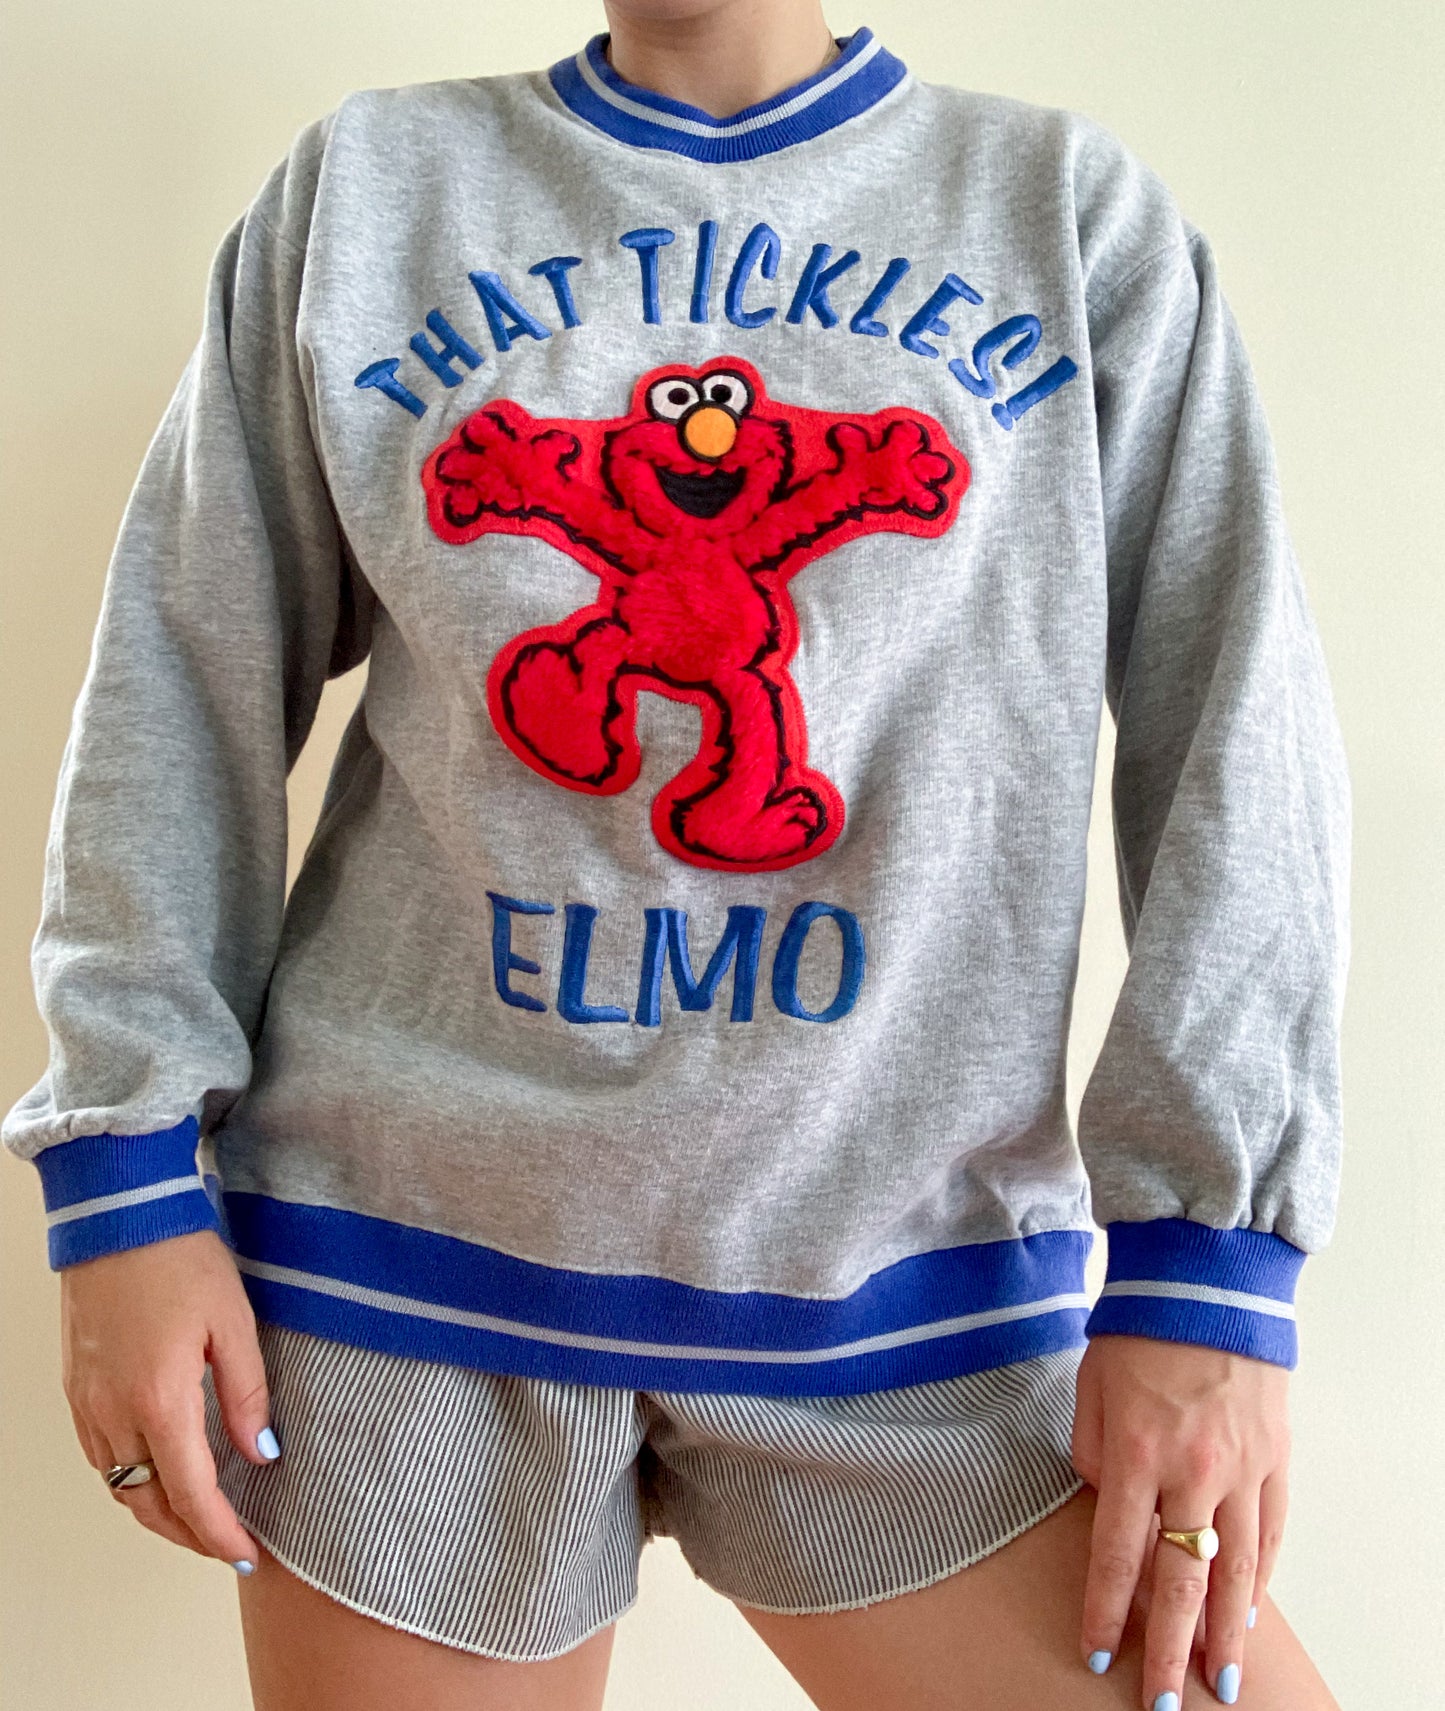 Vintage That Tickles Elmo! Crew